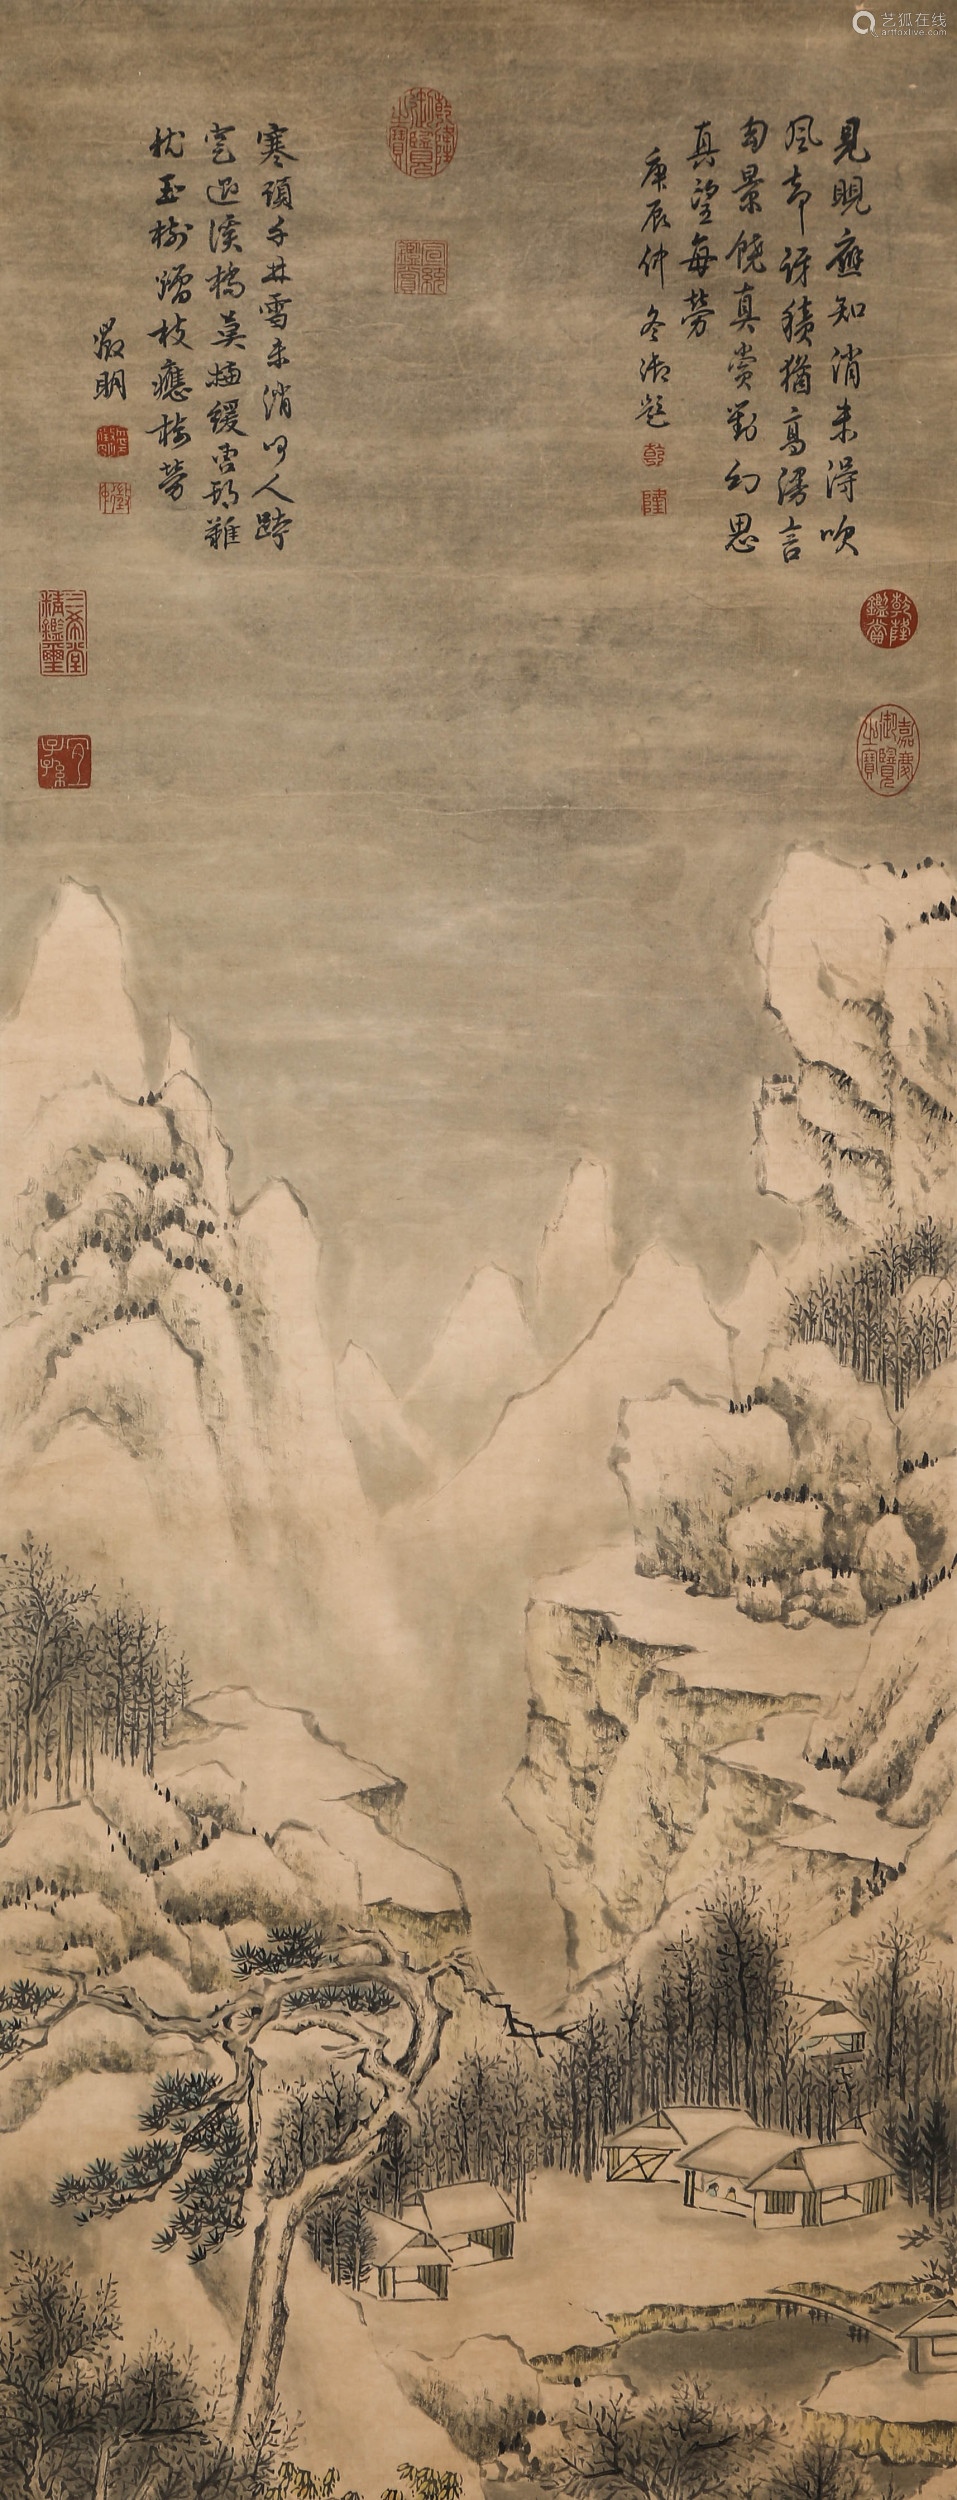 Chinese ink painting,
Wen Zhengming's 